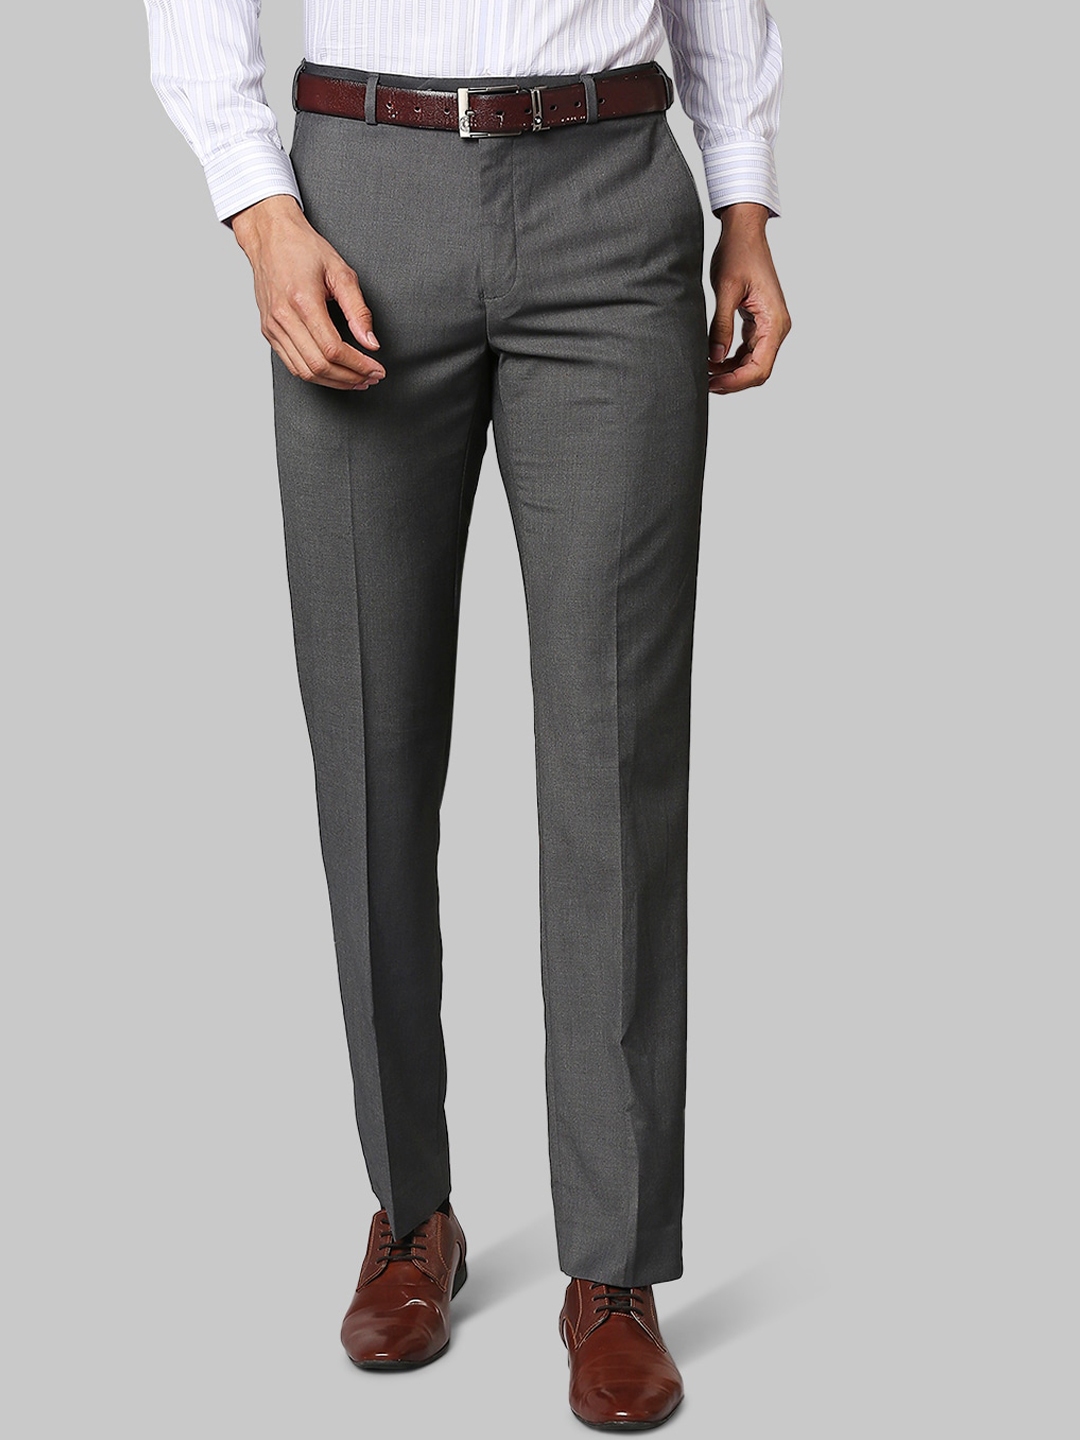 Buy Raymond Men Grey Formal Trousers - Trousers for Men 17420100 | Myntra